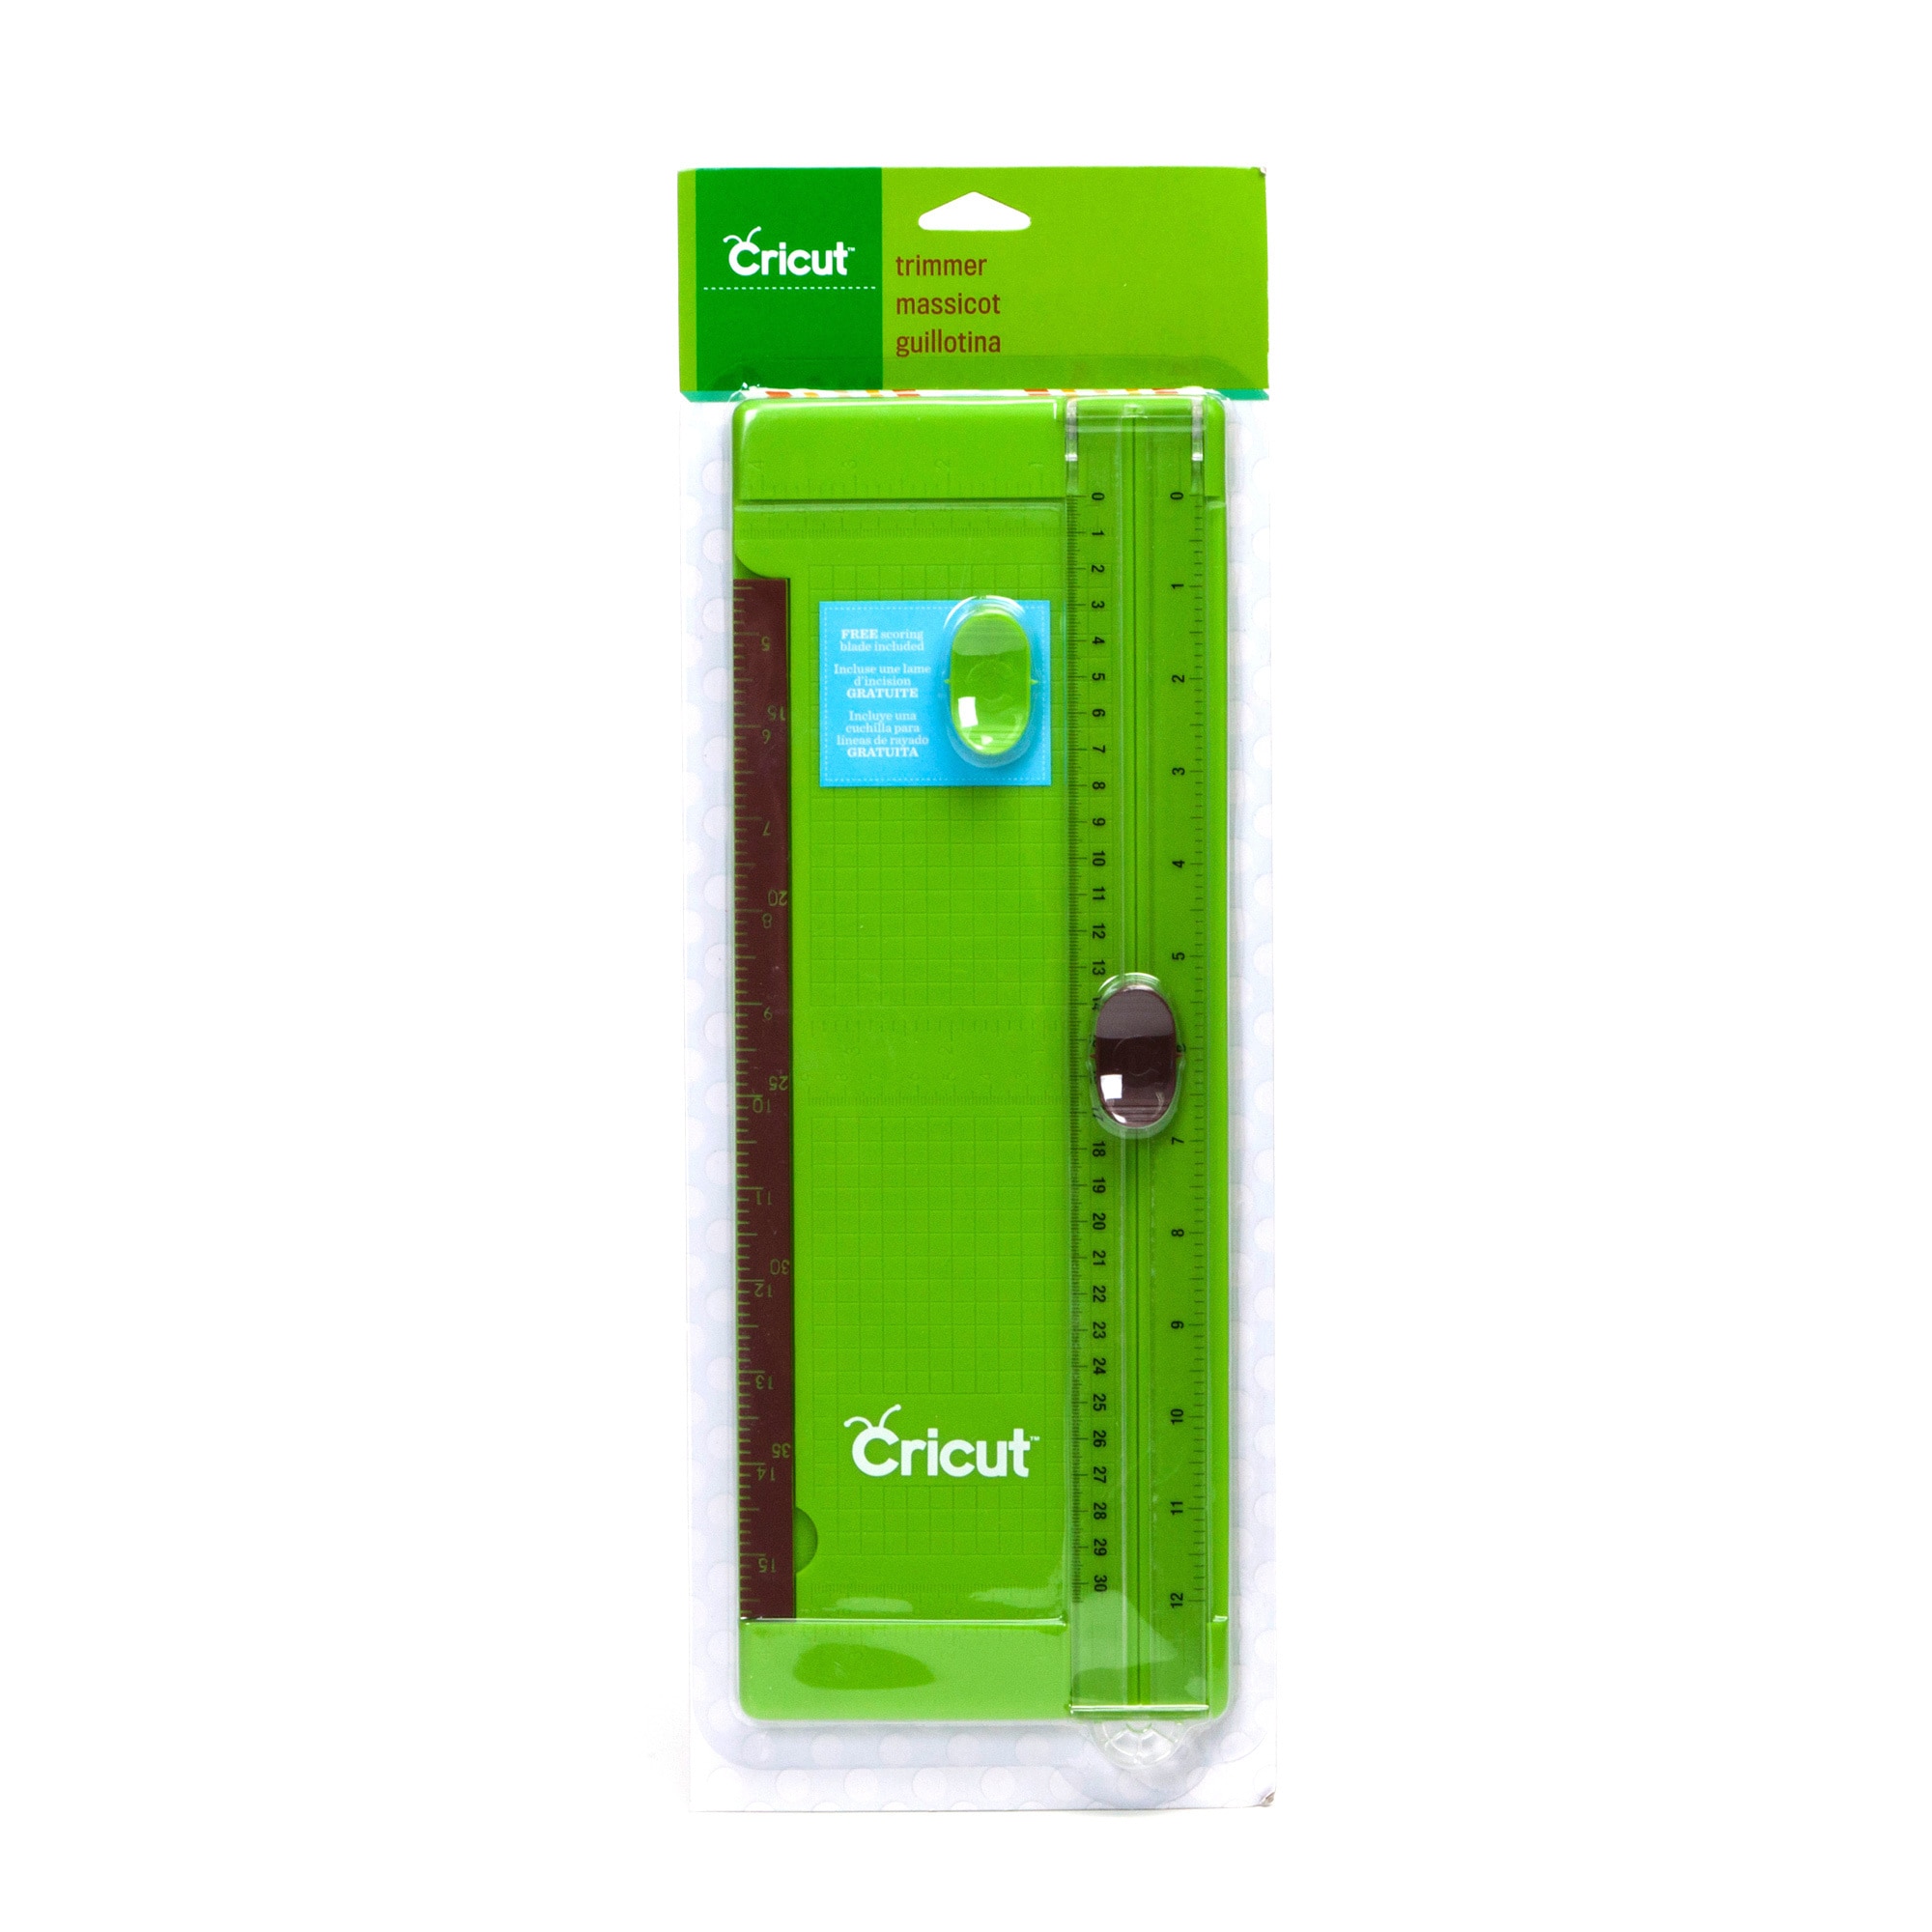 Cricut trimmer tip: it doubles as a scoring tool #cricut